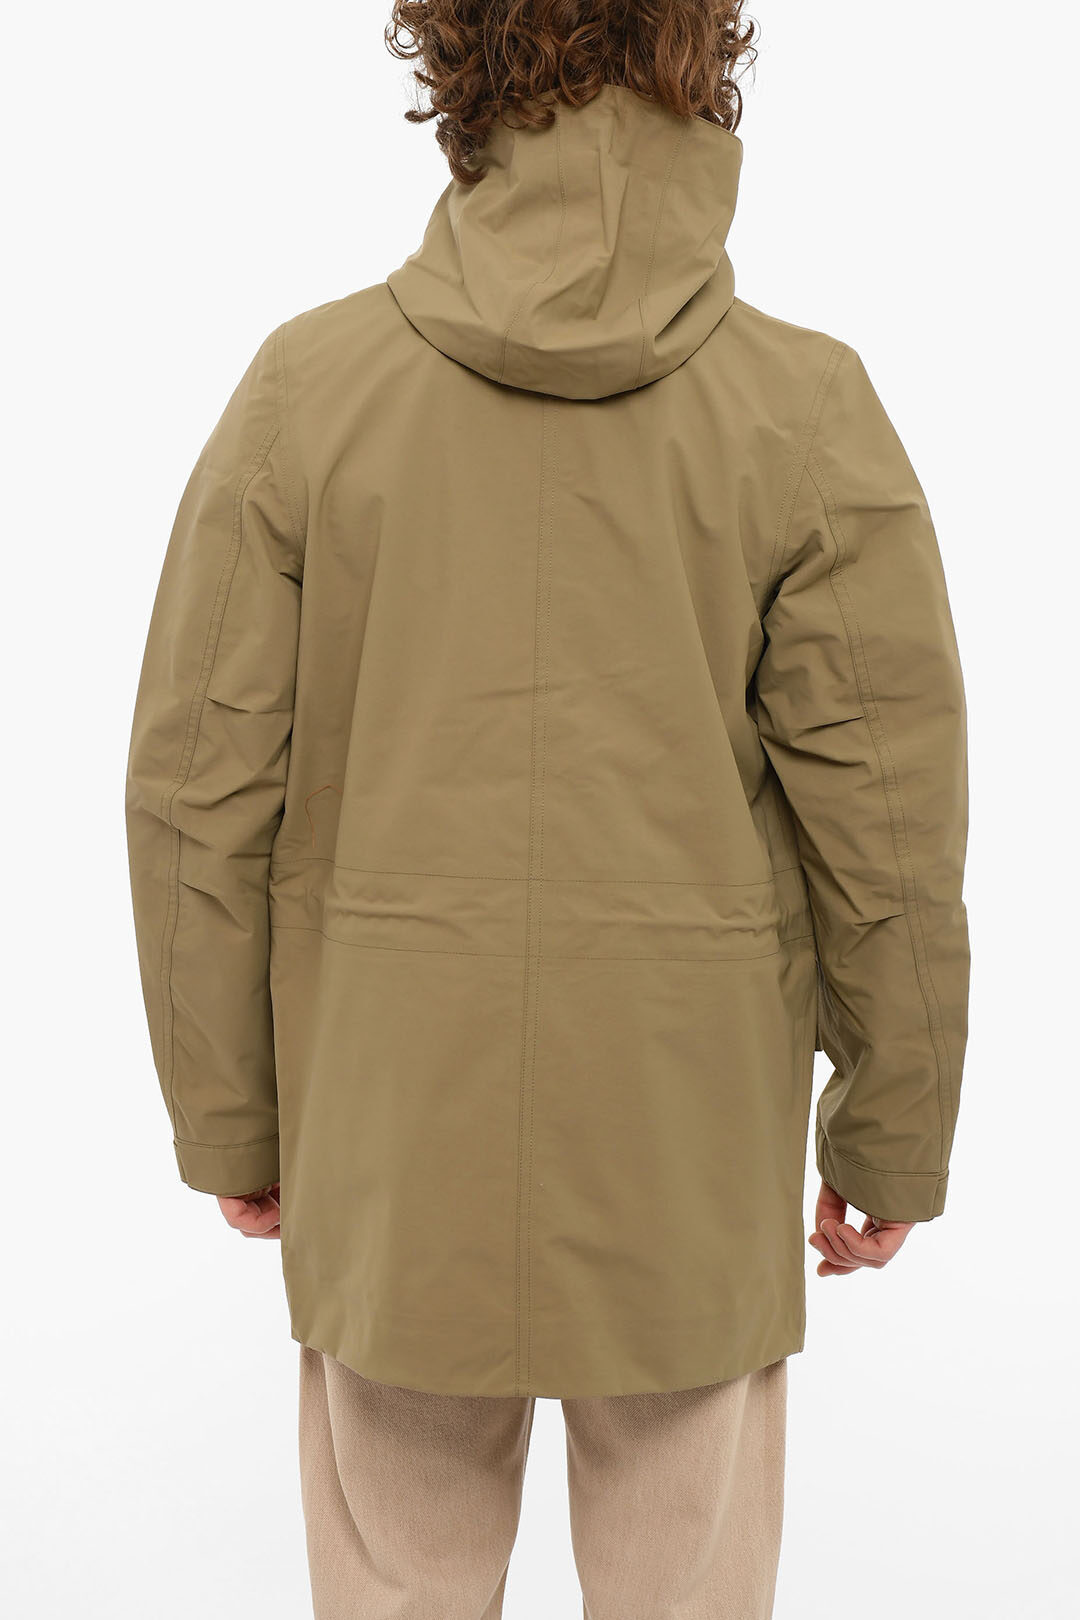 SAMSOE & SAMSOE Men's Khaki Waterproof Raincoat Parka Jacket, SIZE S